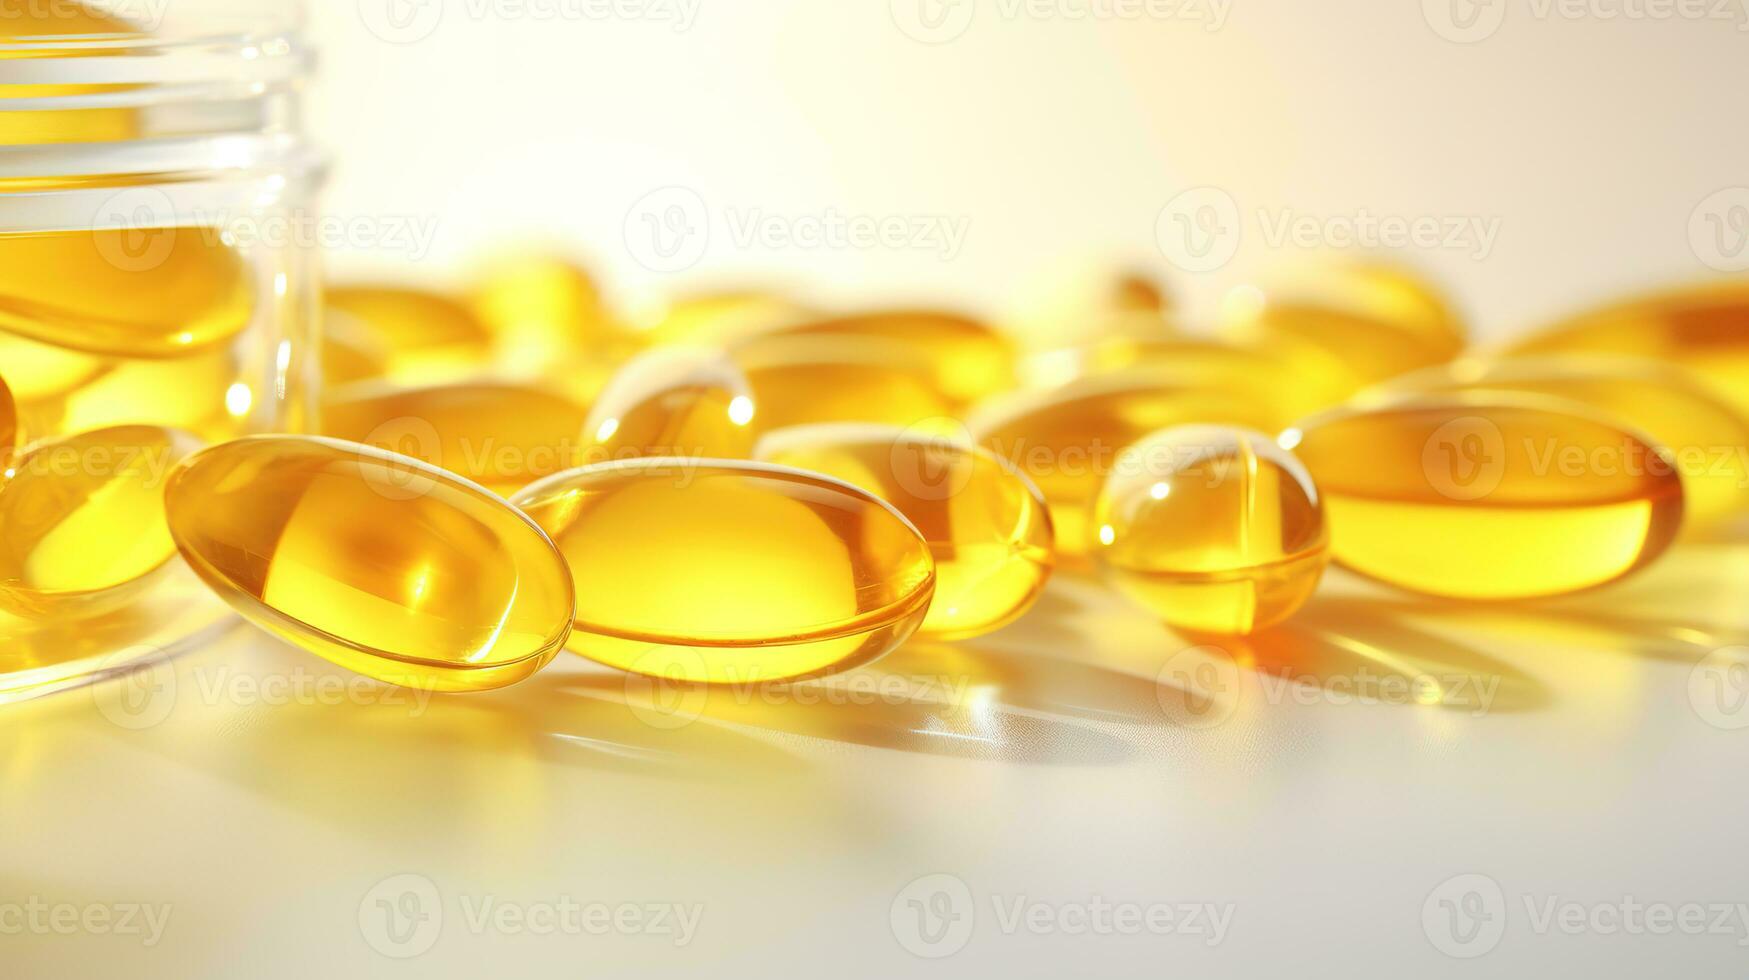 transparente amarillo vitaminas en un ligero antecedentes. vitamina d, omega 3, omega 6, comida suplemento petróleo lleno pescado aceite, vitamina a, vitamina mi, Semilla de lino aceite. foto